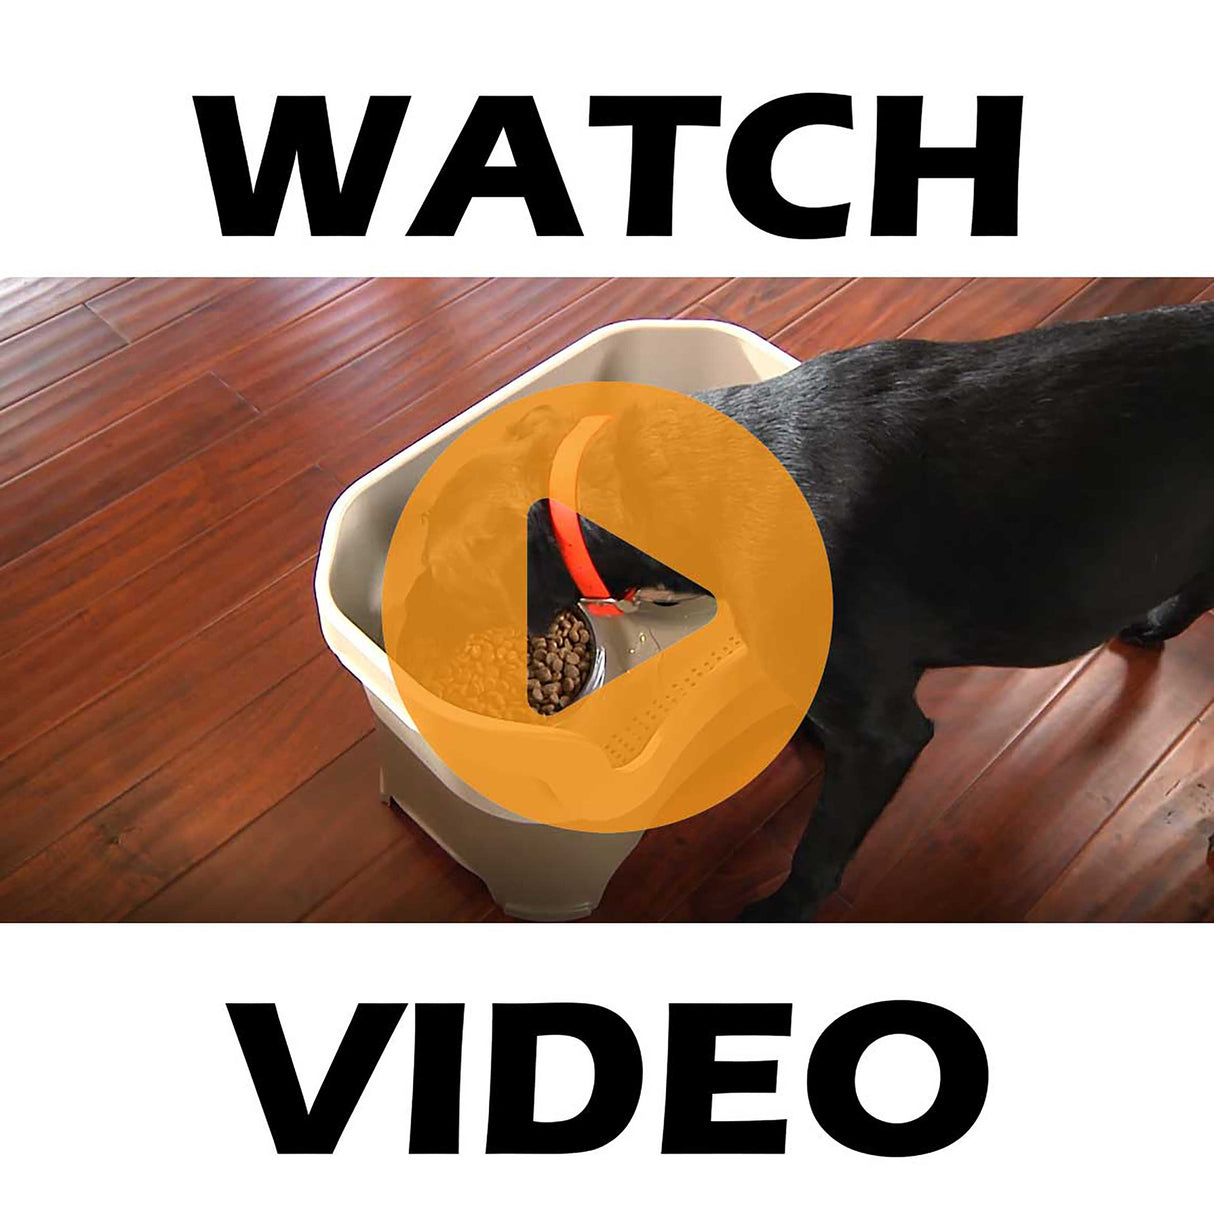 Neater Feeder Deluxe Dog video.